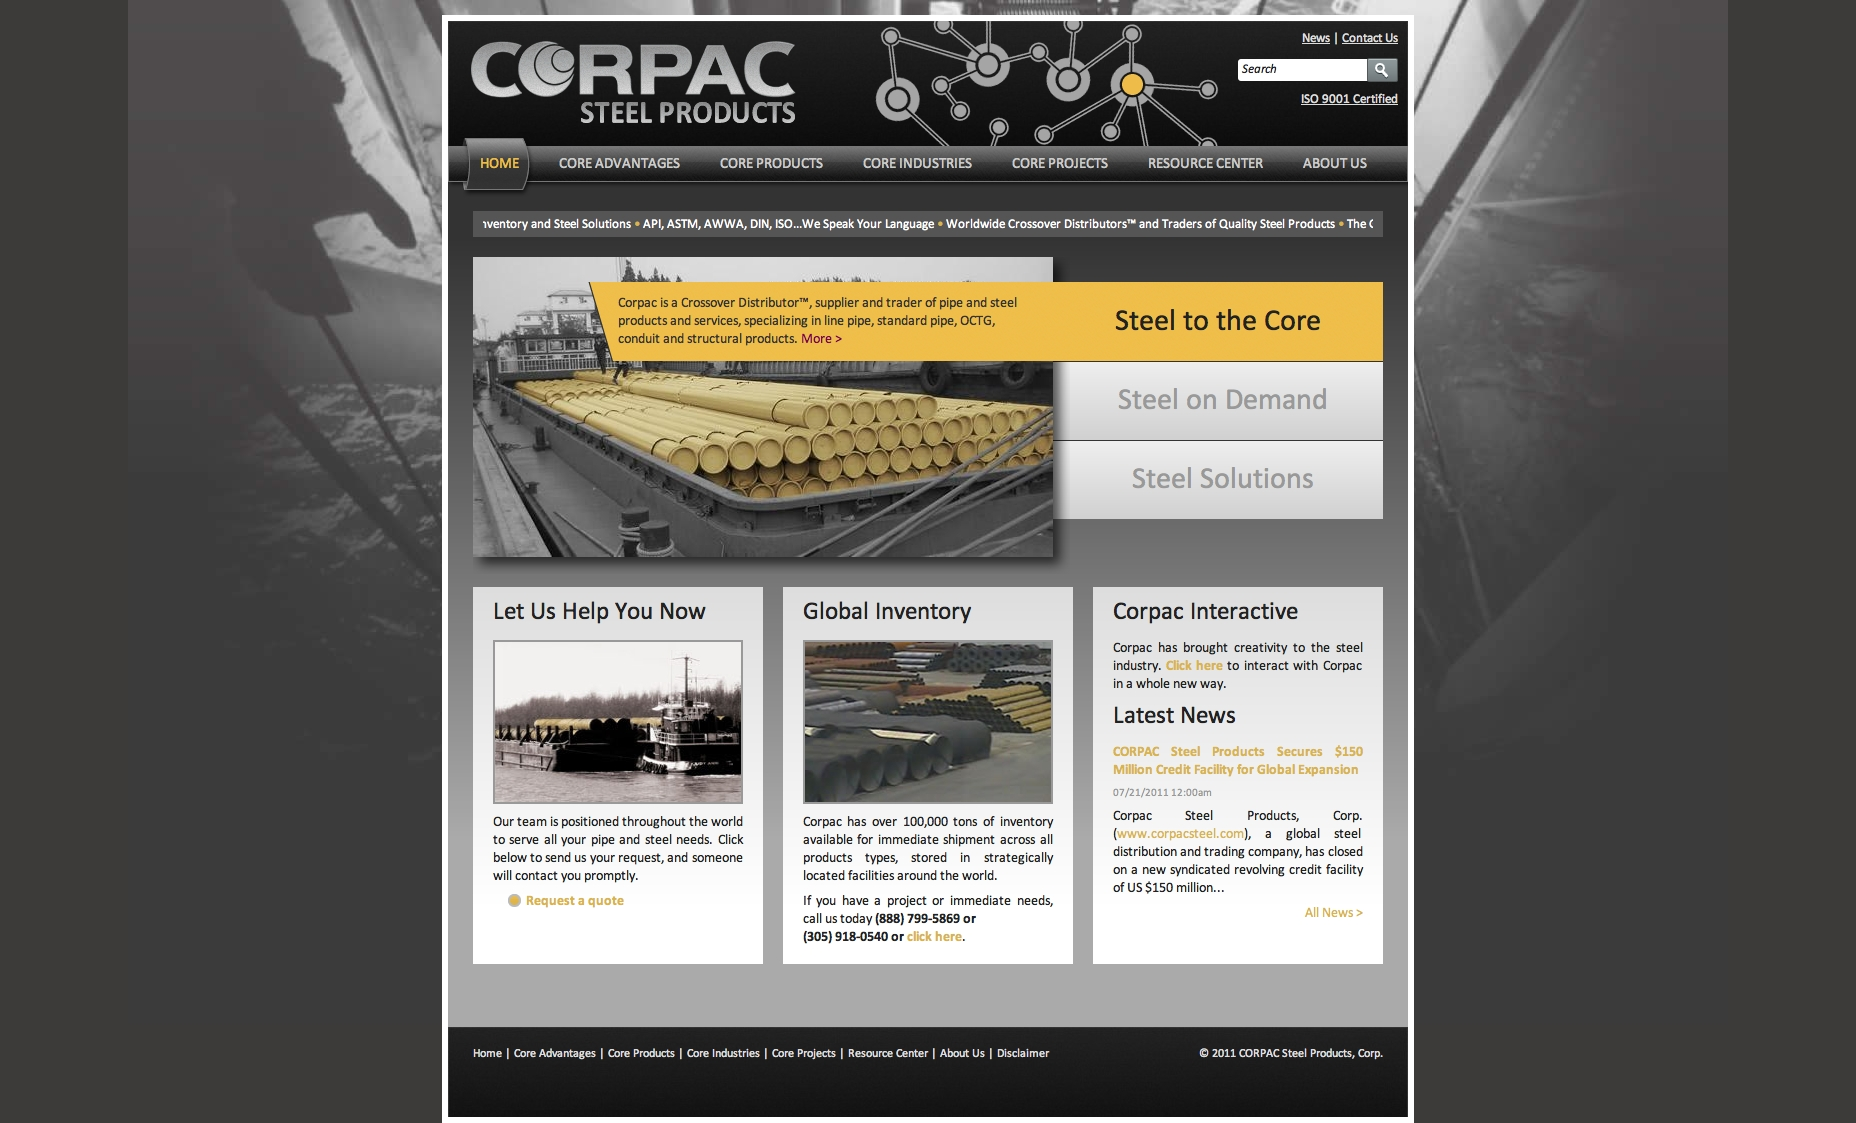 Corpac Steel Products (BLU42 Media)